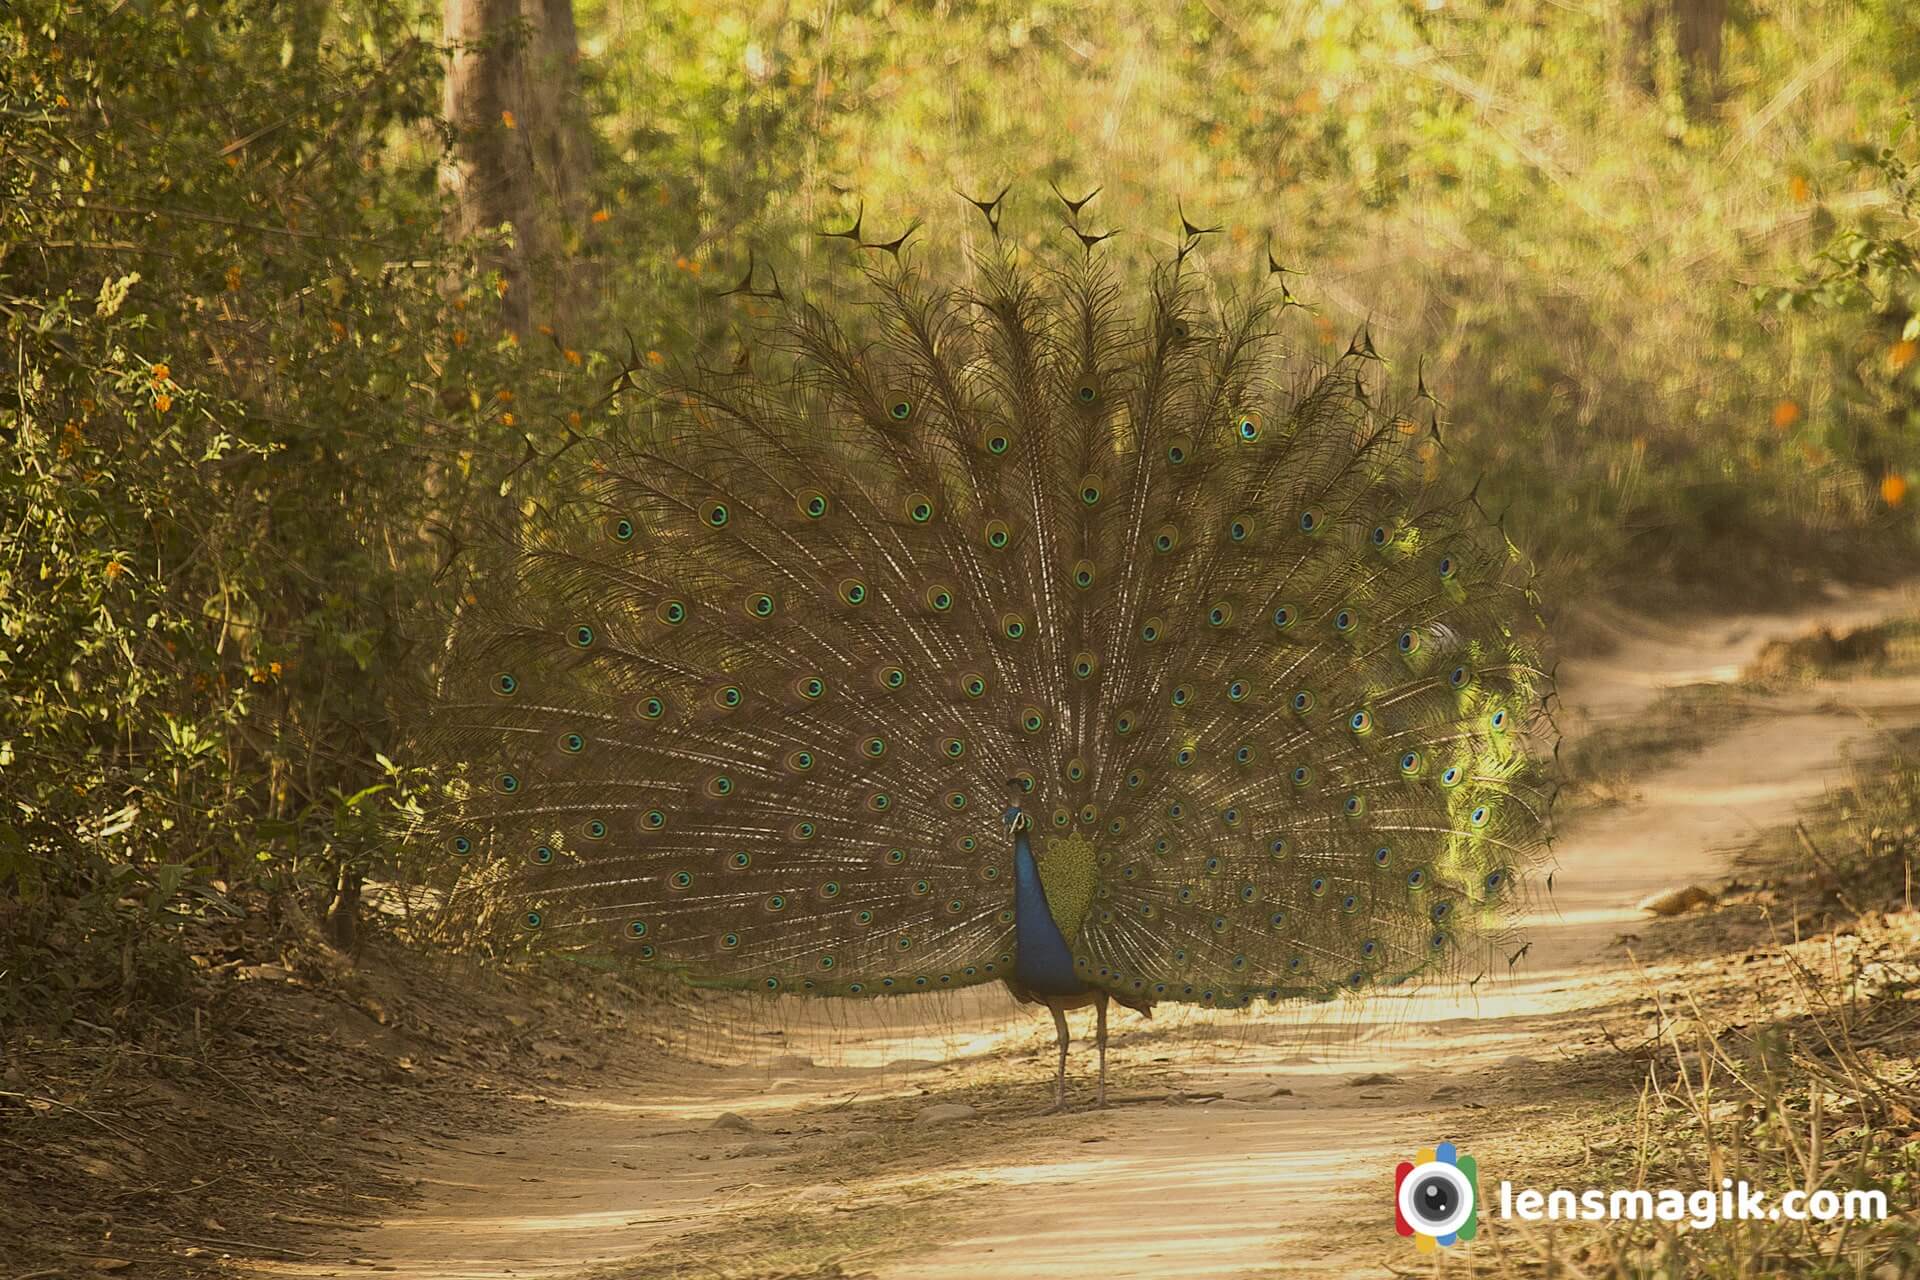 Peacock Dance